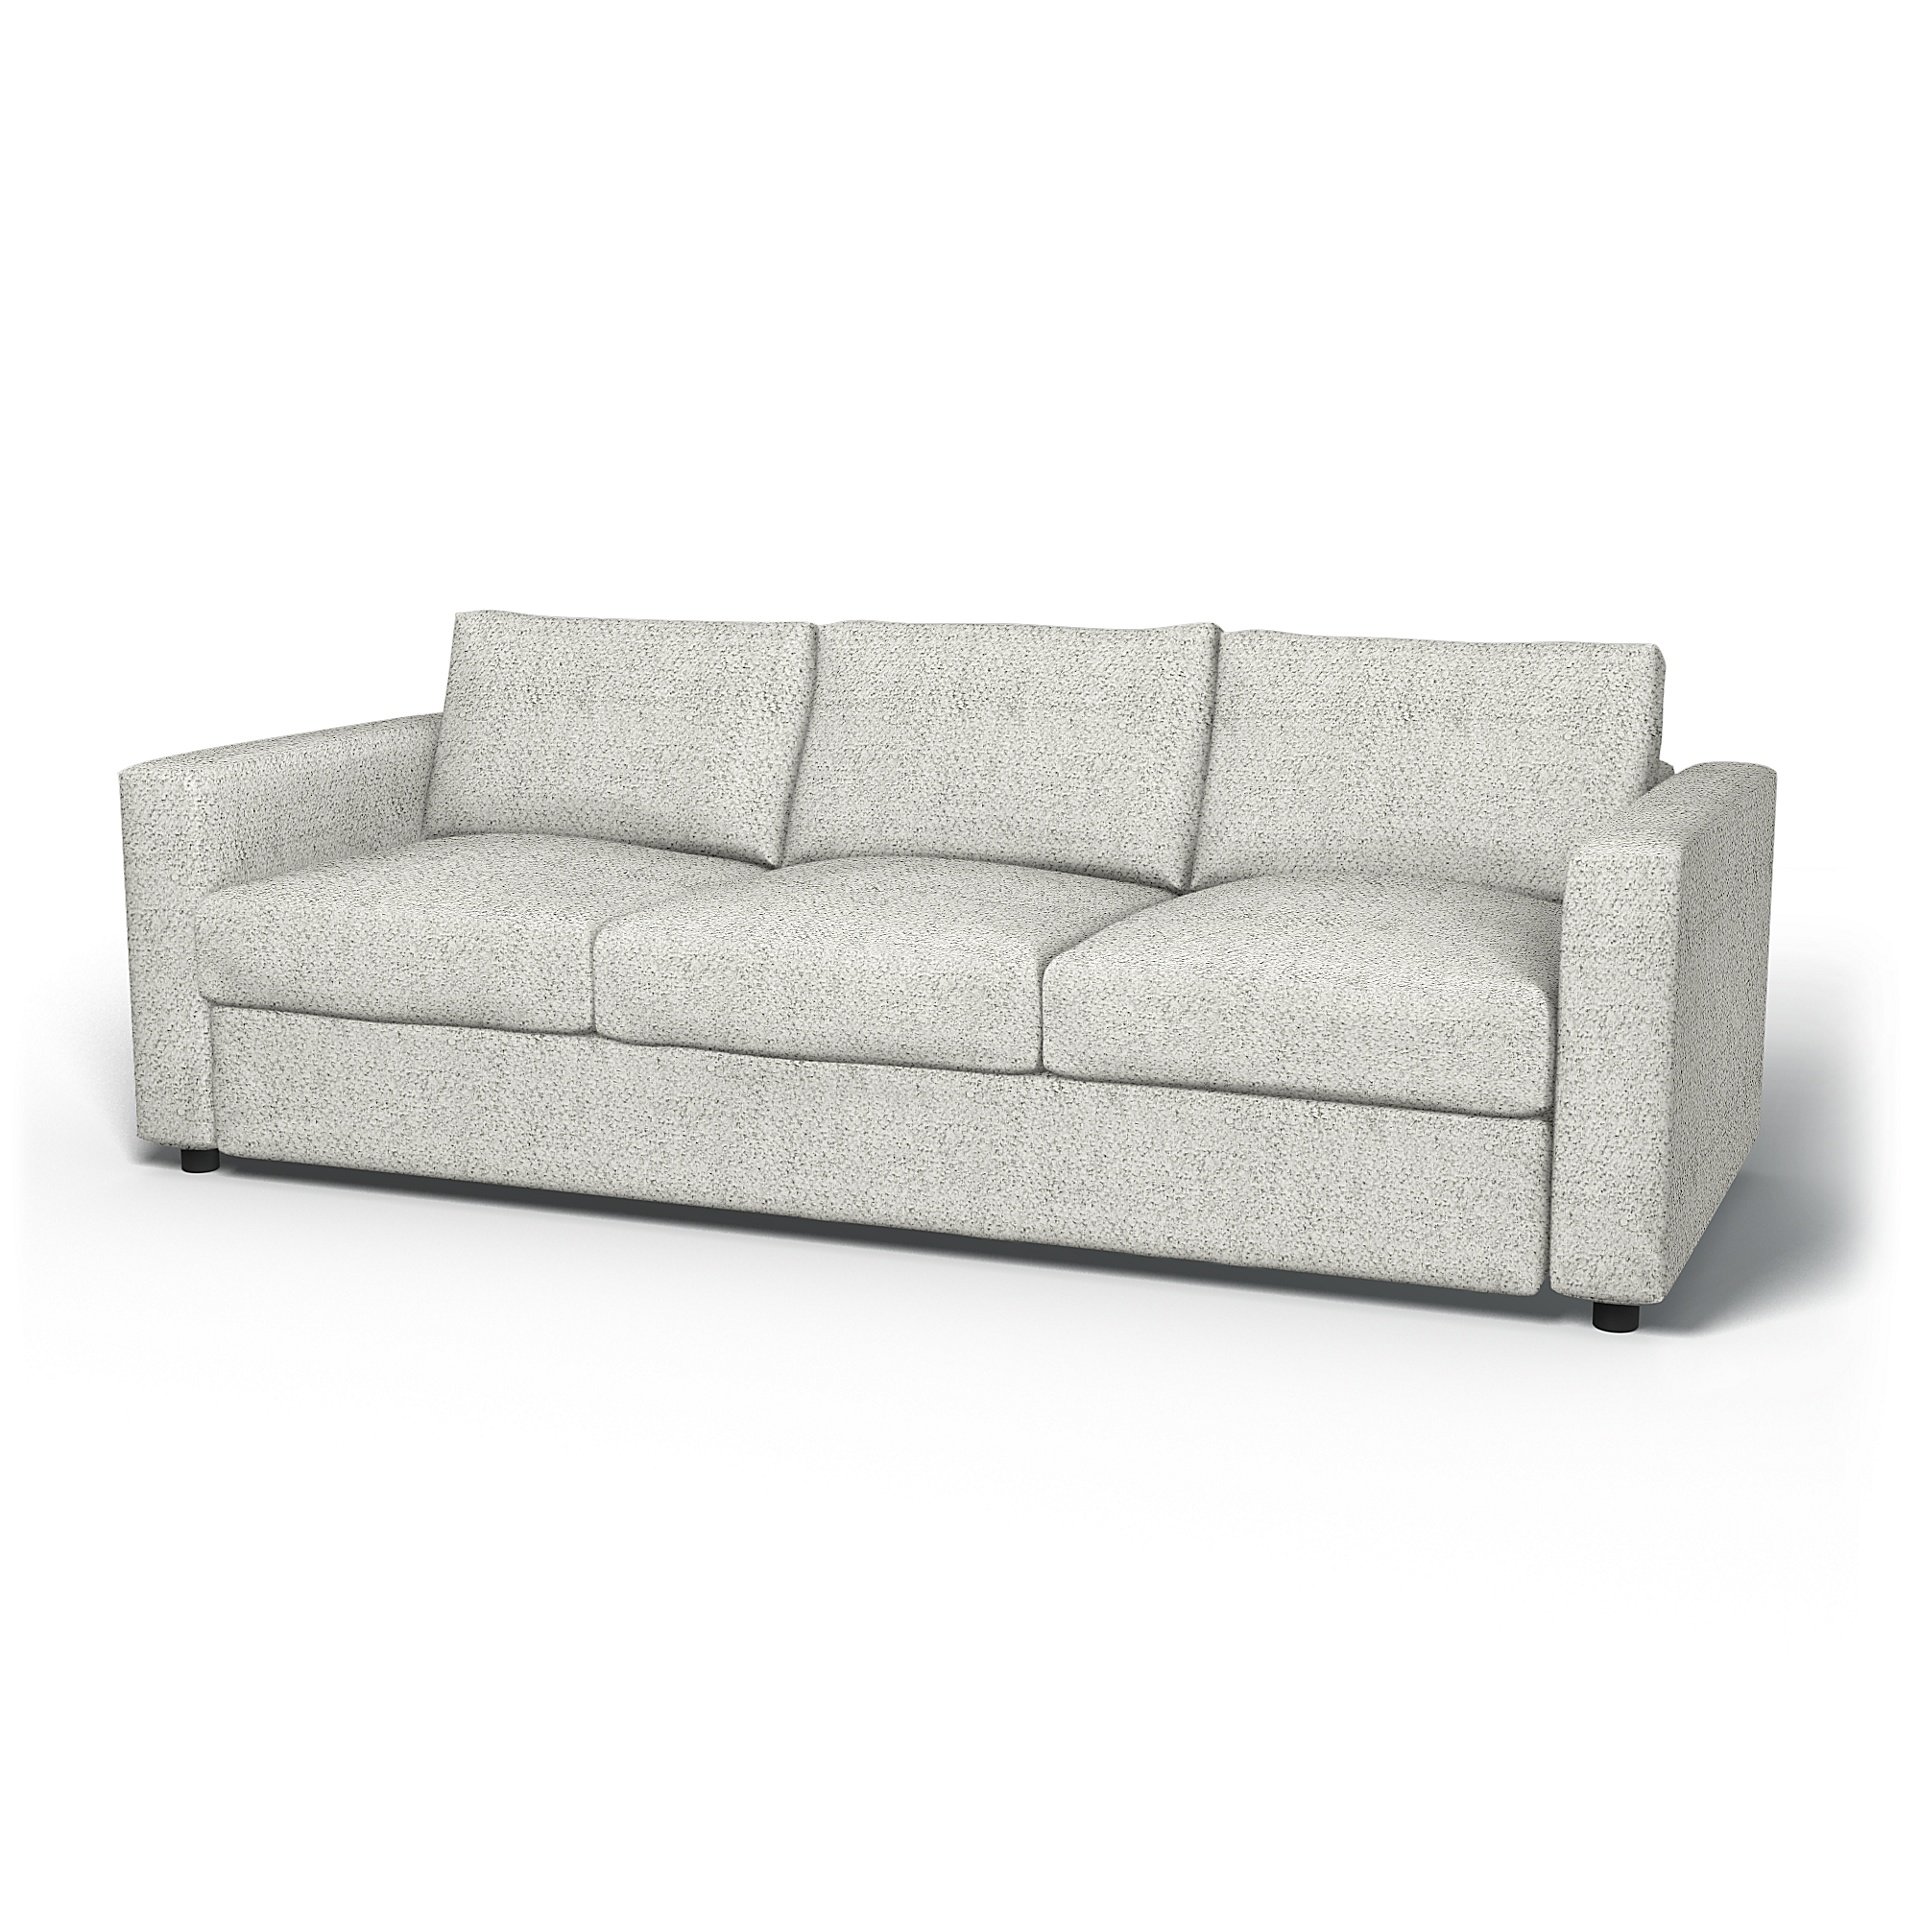 IKEA - Vimle 3 Seater Sofa Cover, Ivory, Boucle & Texture - Bemz